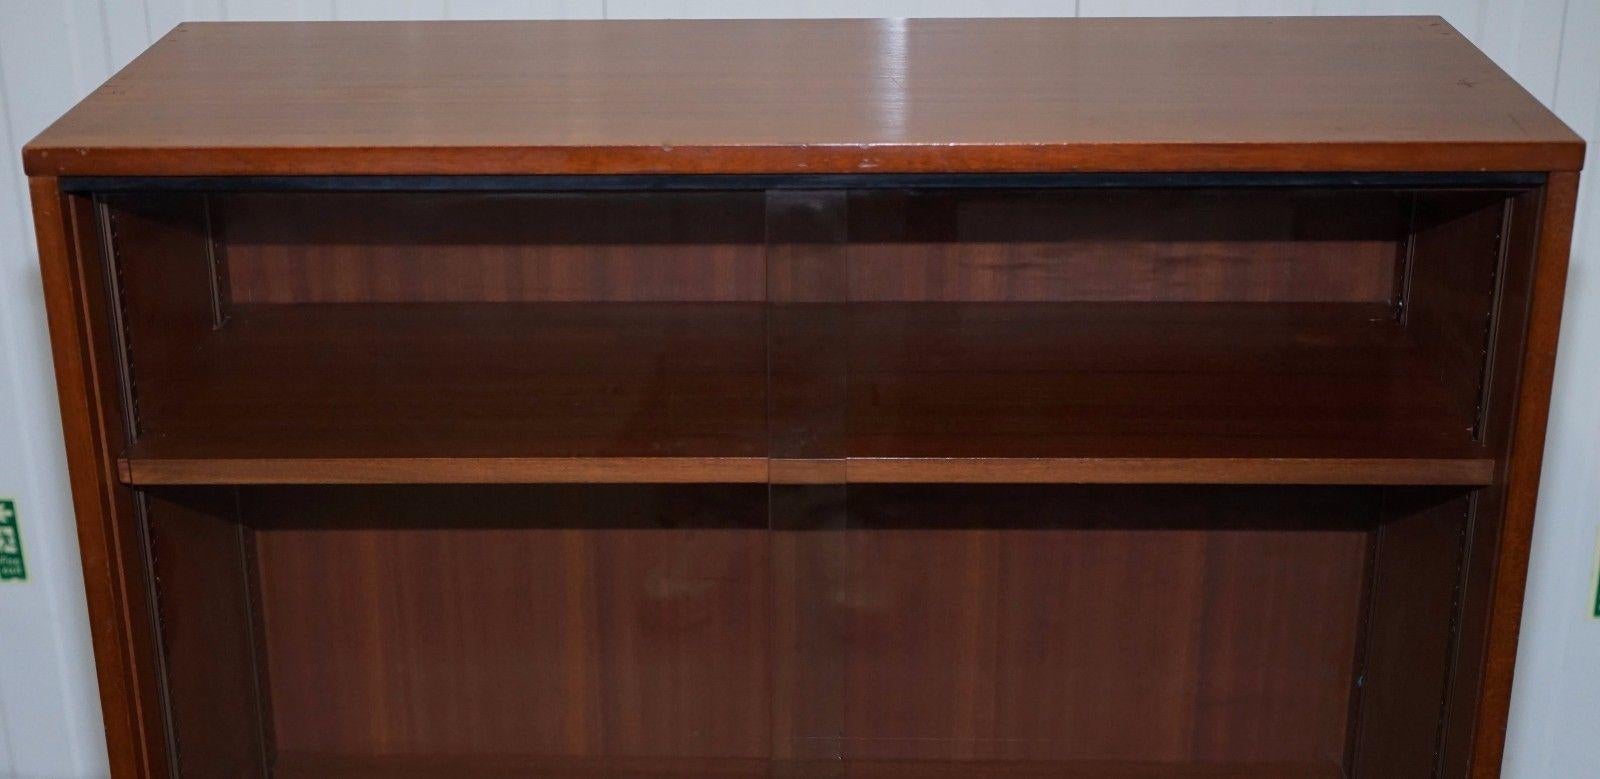 20th Century Midcentury Danish Glass Door Display Cabinet Bookcase Very Usable Versatile